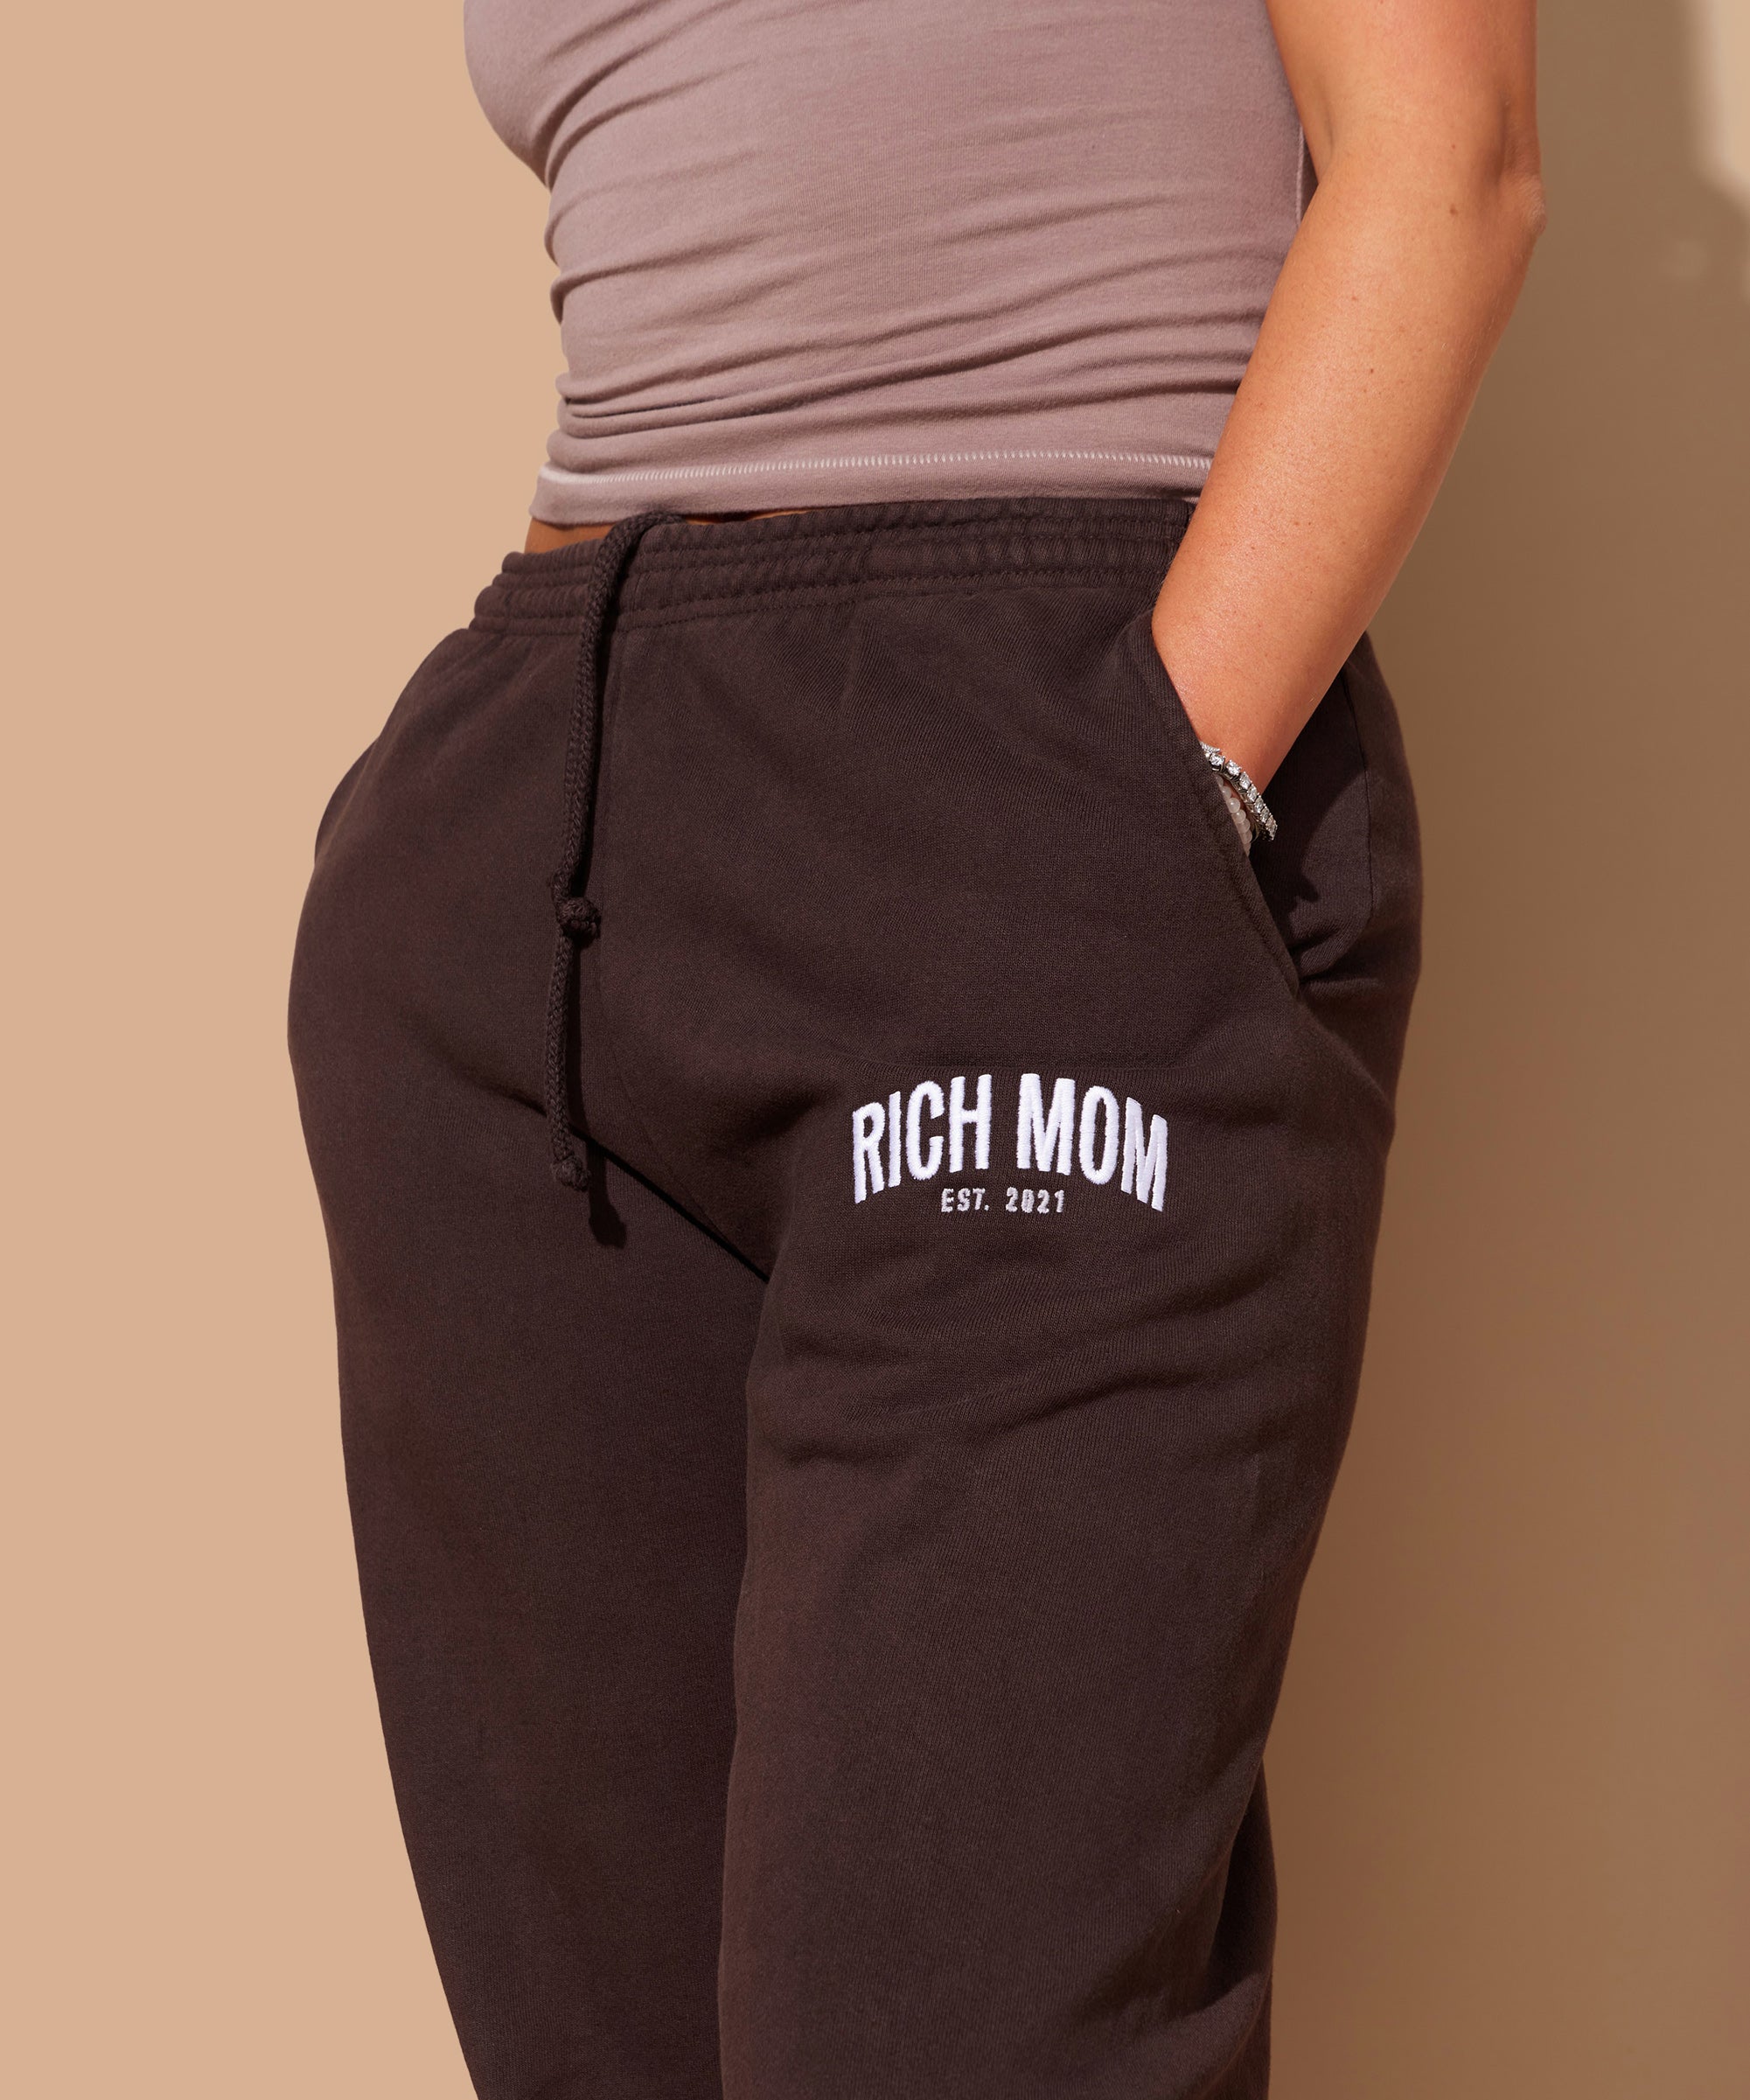 Tinx wears Rich Mom Gear: Essentials Sweatpants in Vegan Keto Chocolate Brownie